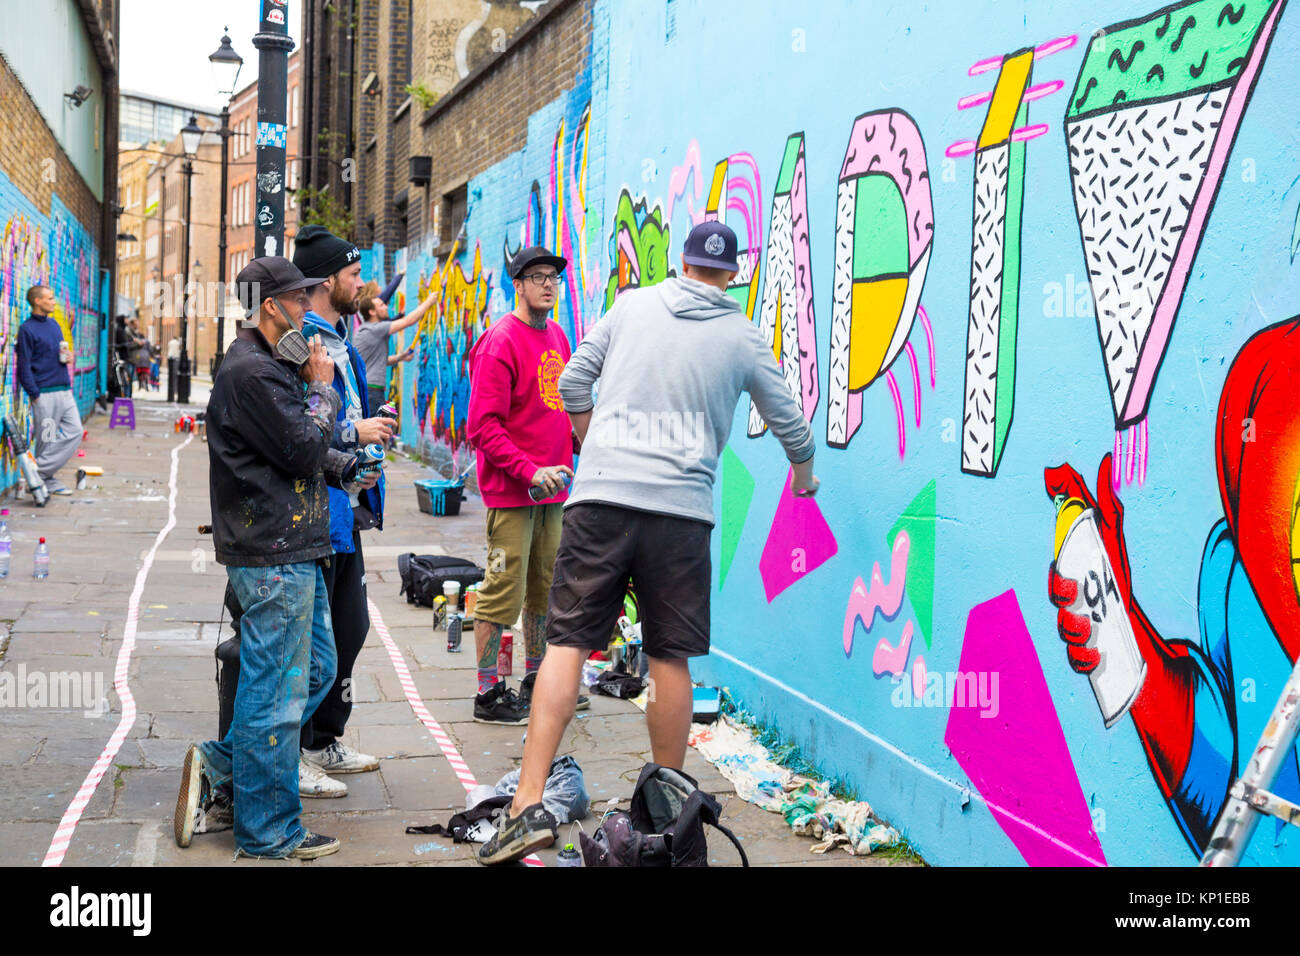 Graffiti street artists spraying the walls in Fleur Street, London, UK Stock Photo